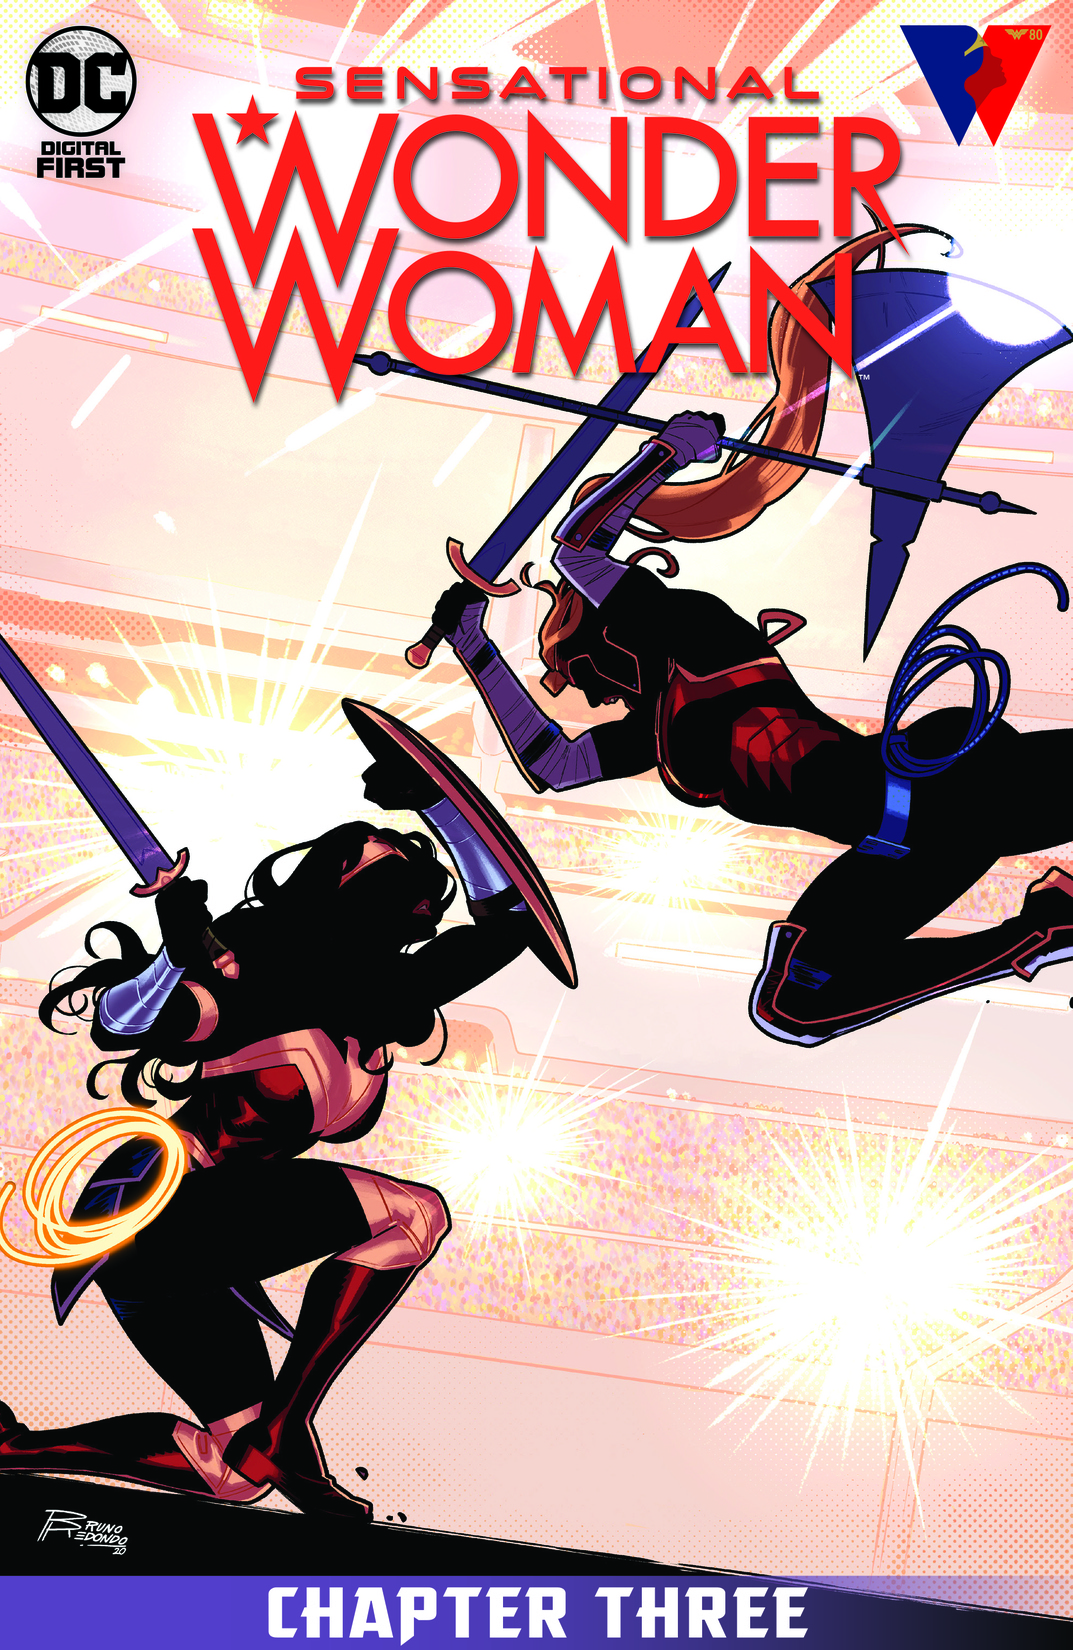 Sensational Wonder Woman #3 preview images